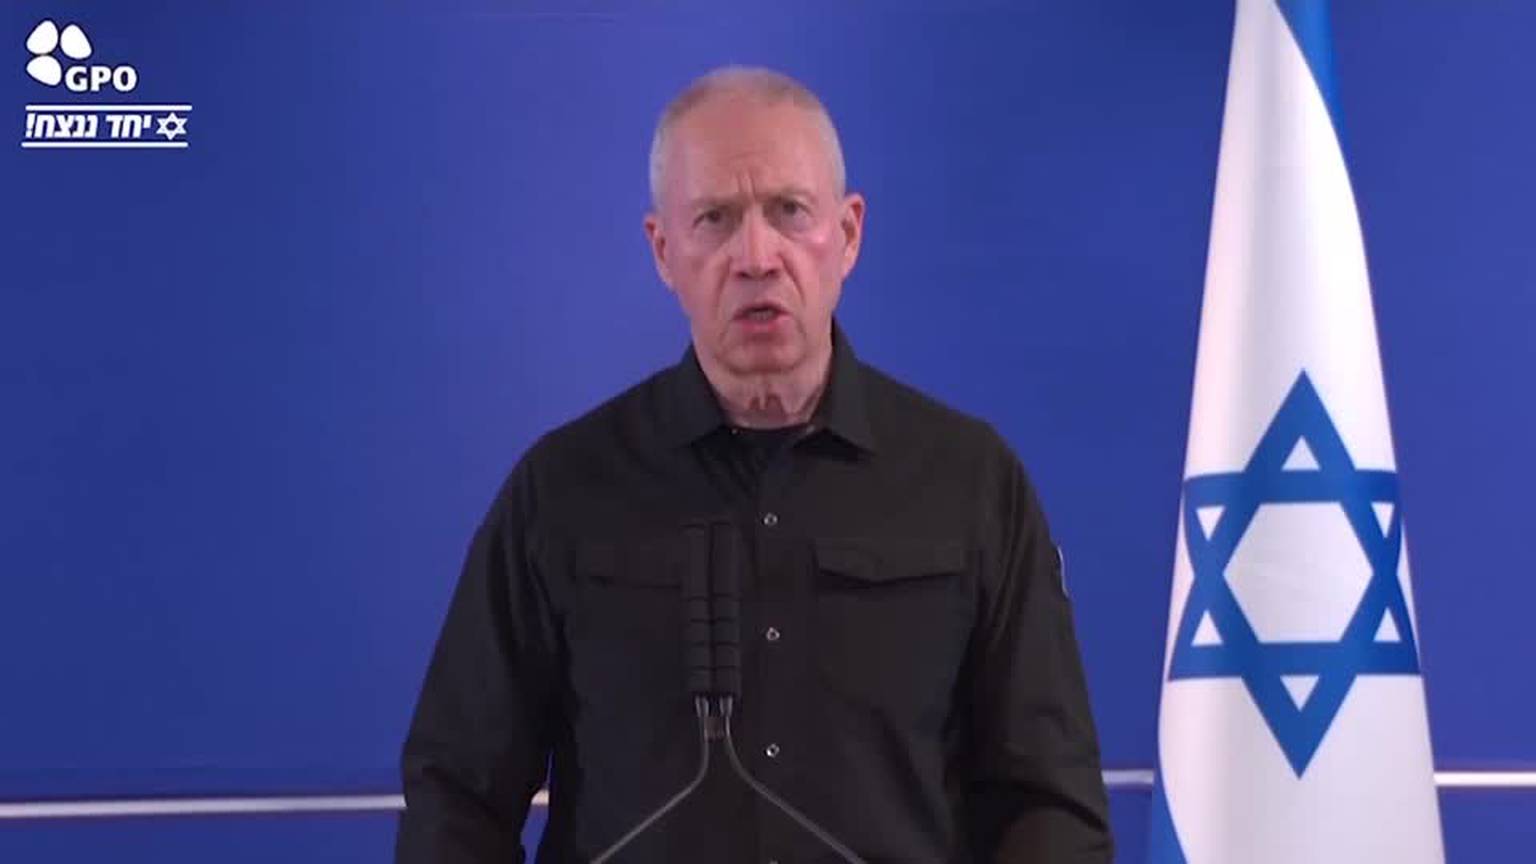 Video: Israel’s defense chief challenges Netanyahu on Gaza [Video]